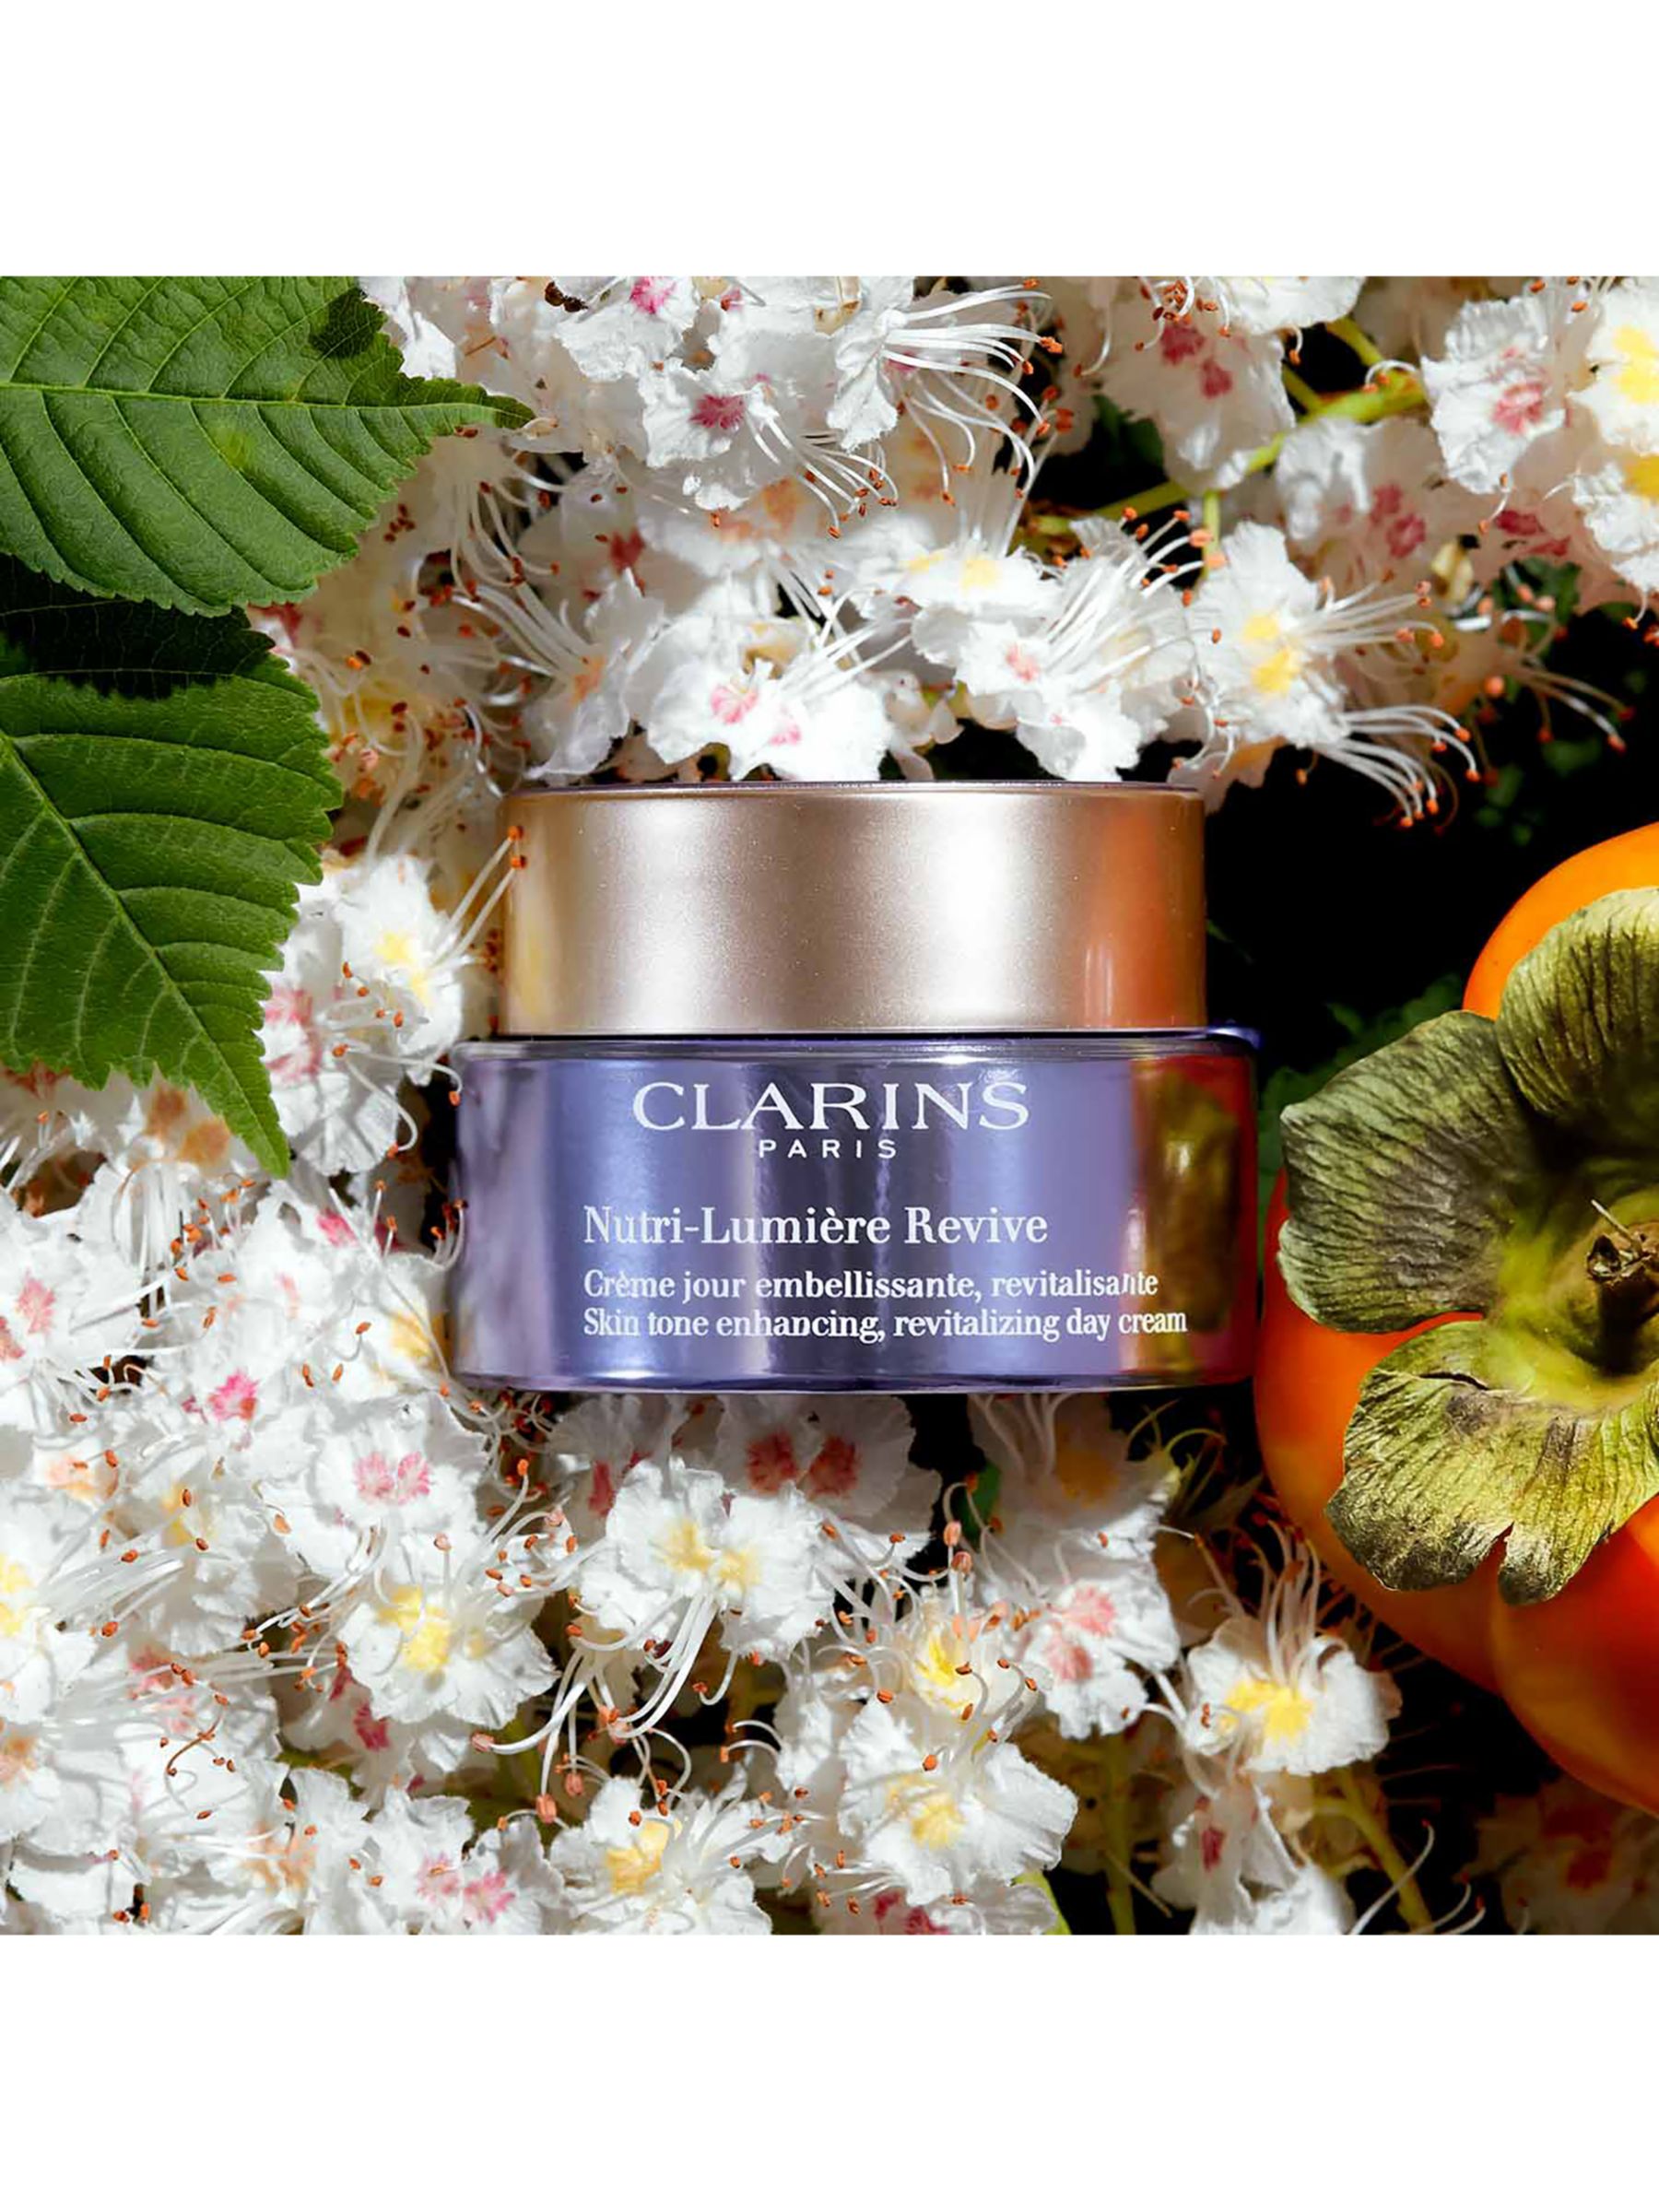 Clarins Nutri-Lumière Revive Cream, 50ml 4